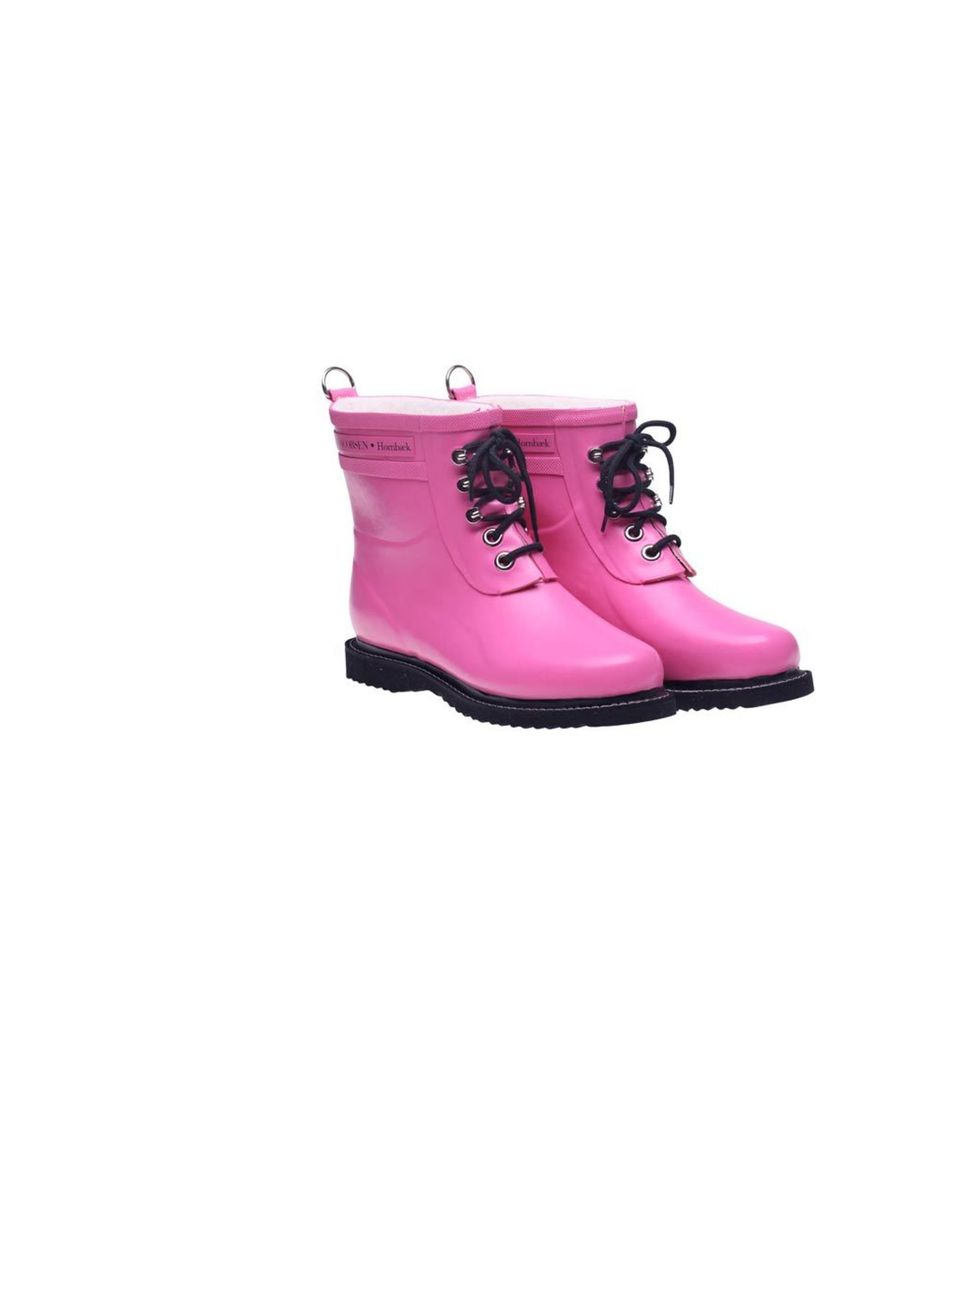 <p>Ilse Jacobsen 'Rub' wellies, £95, at <a href="http://www.coggles.com/item/Ilse-Jacobsen/Rub-2-Pink-Boots/AONQ">Coggles.com</a></p>